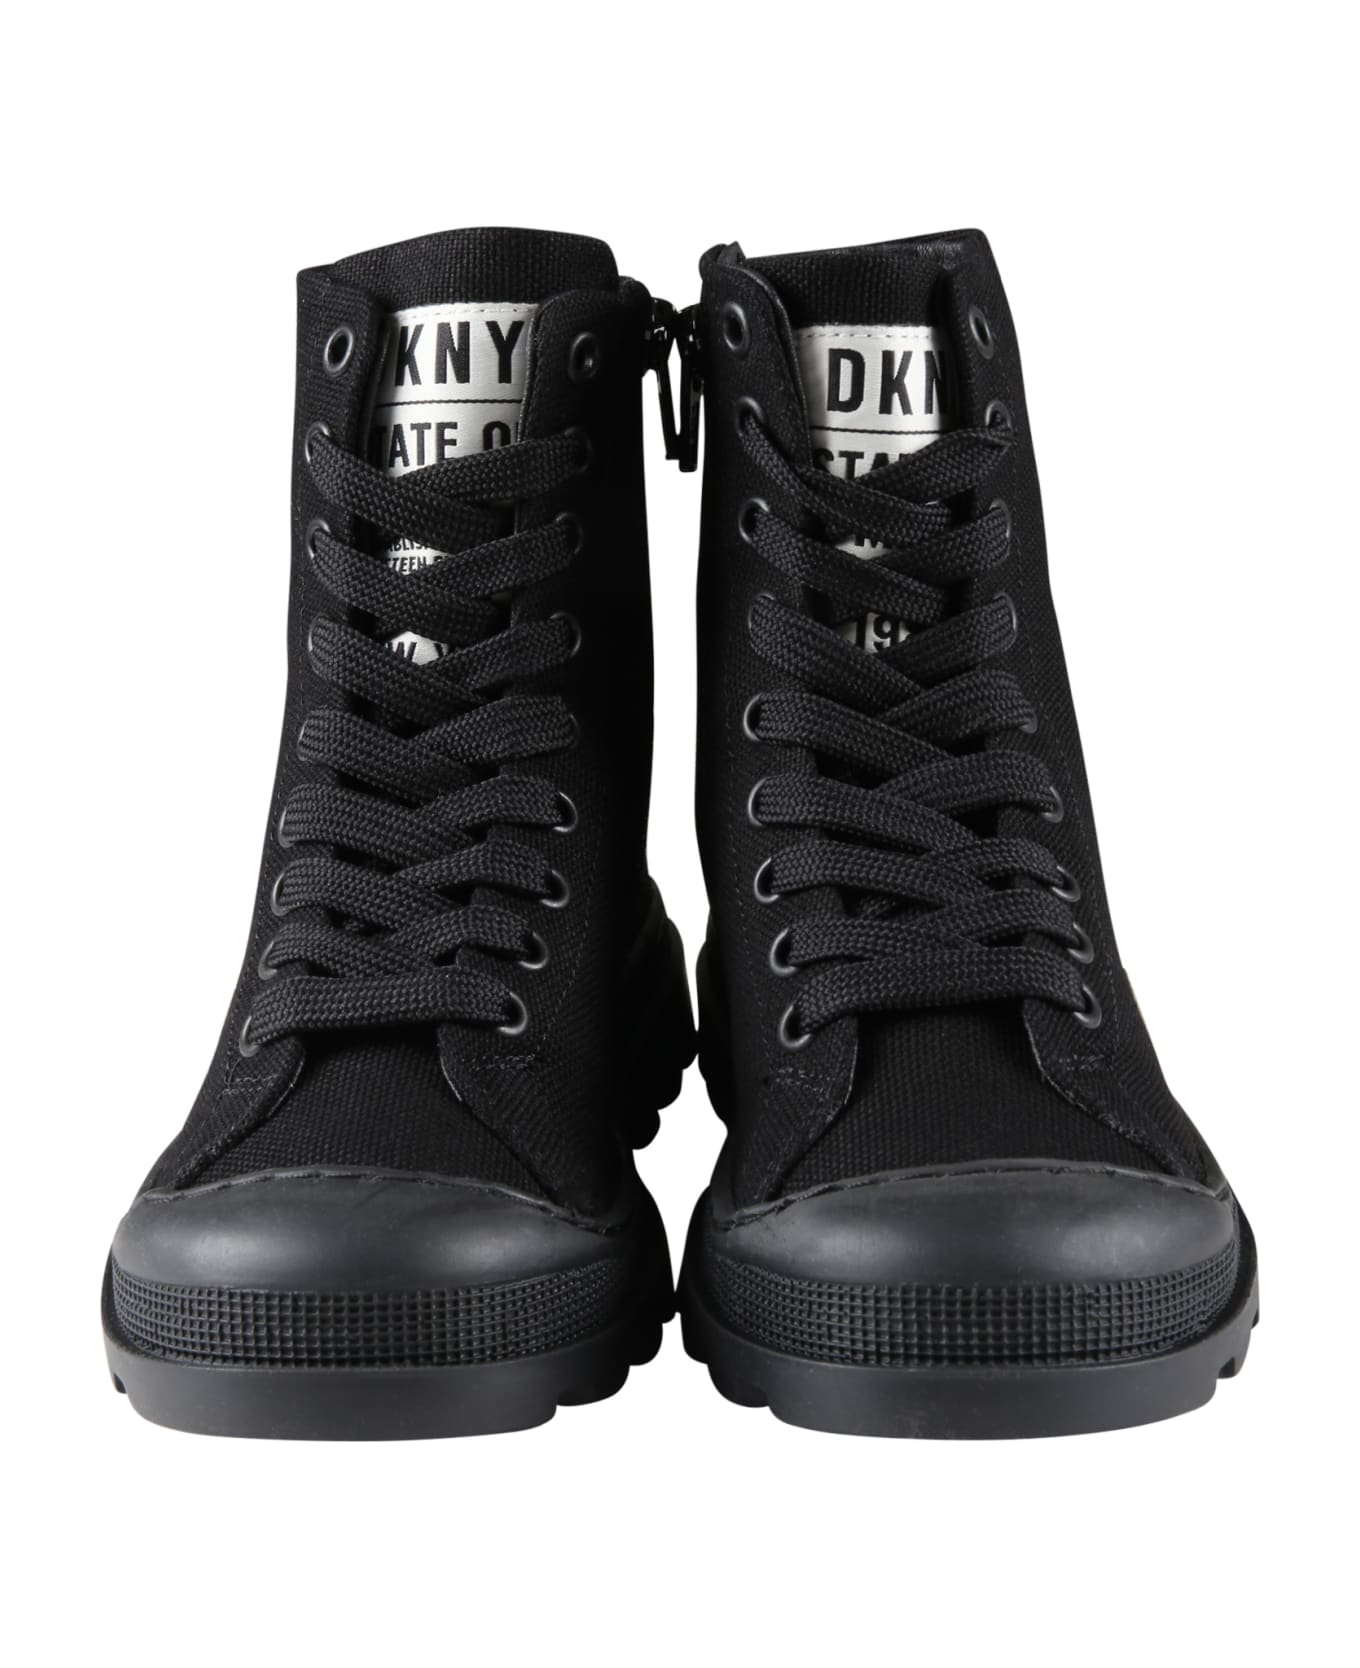 DKNY Black Sneakers For Girl With White Logo - Black シューズ